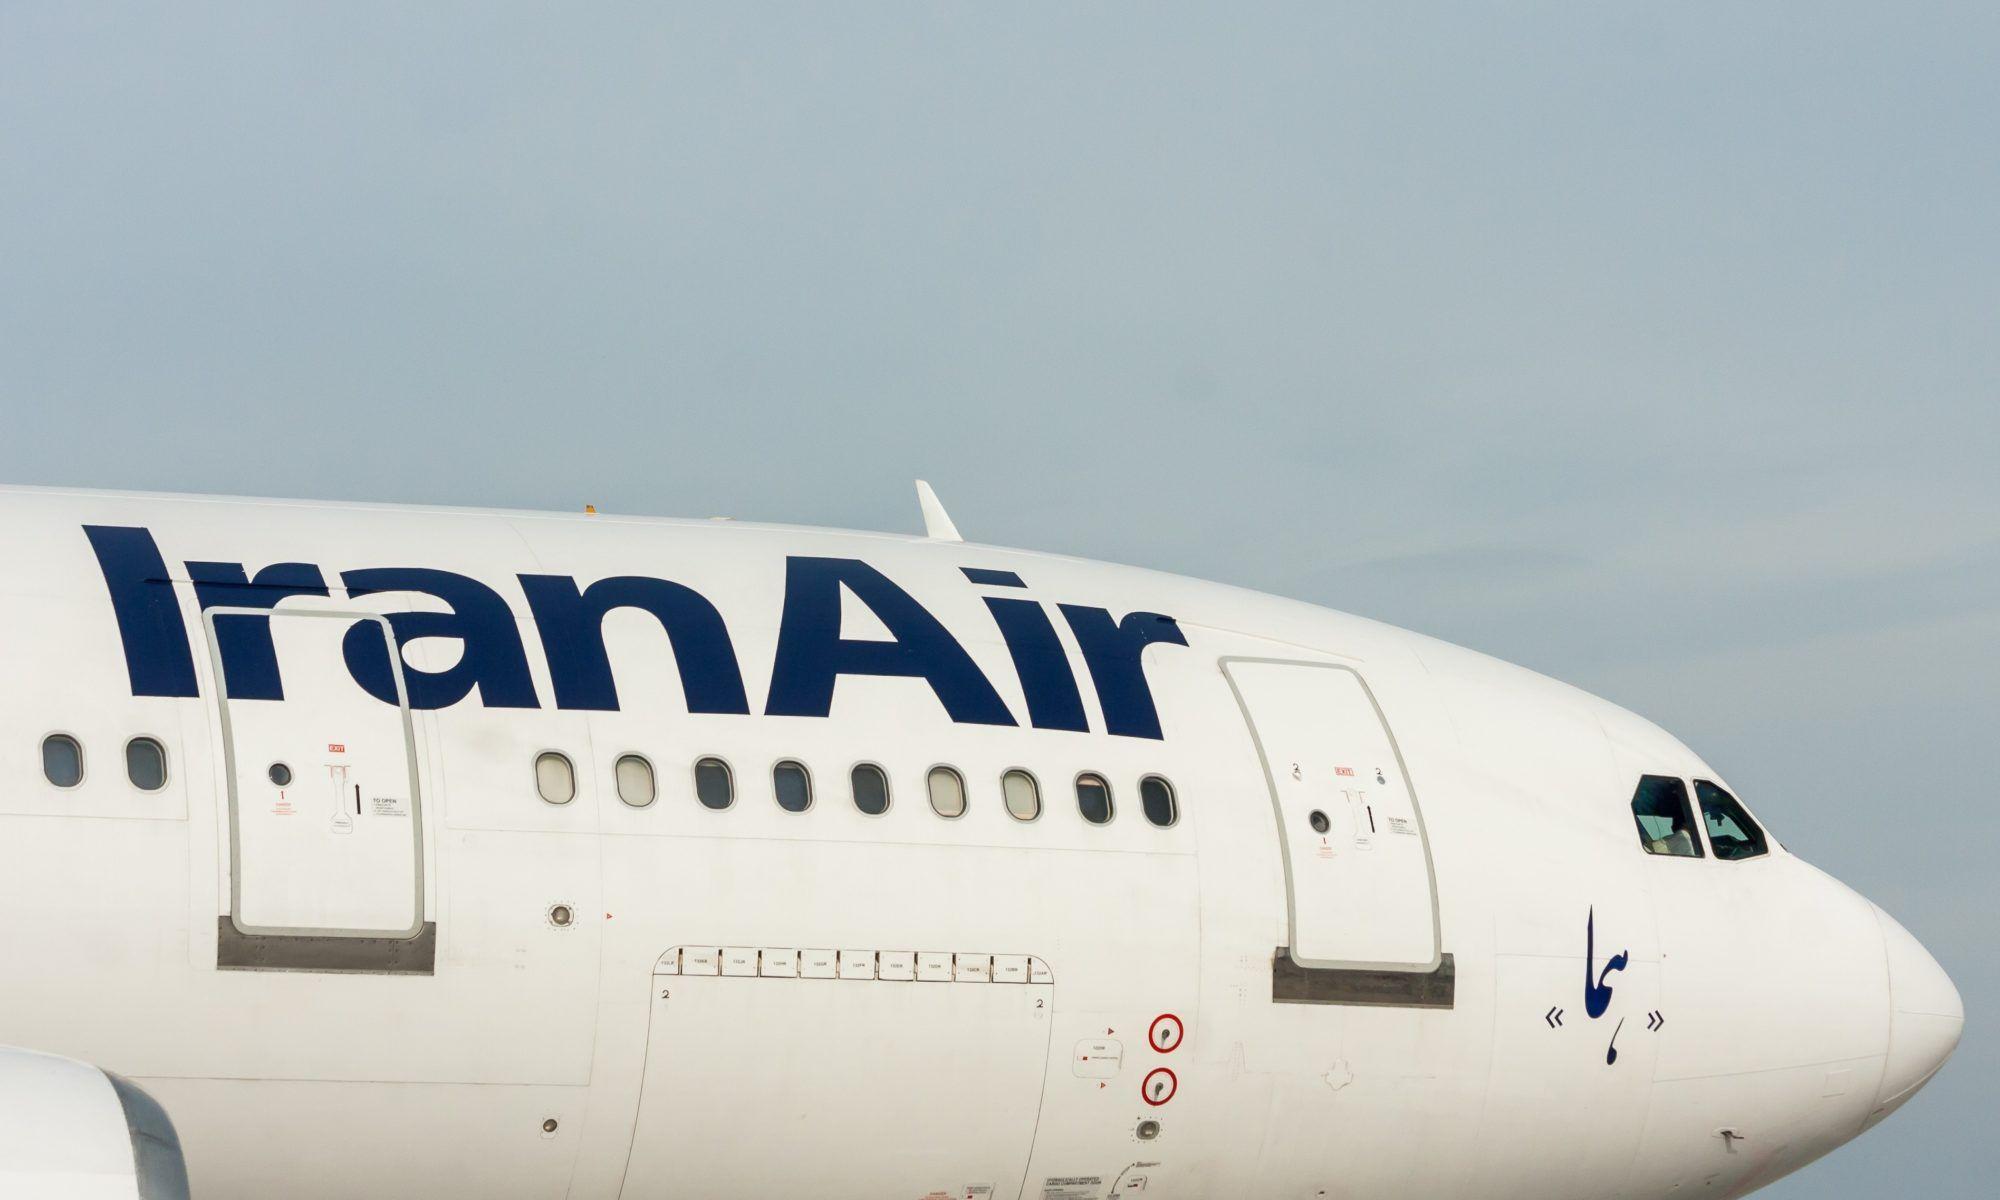 Airline Swan Logo - Airline Insight: IranAir